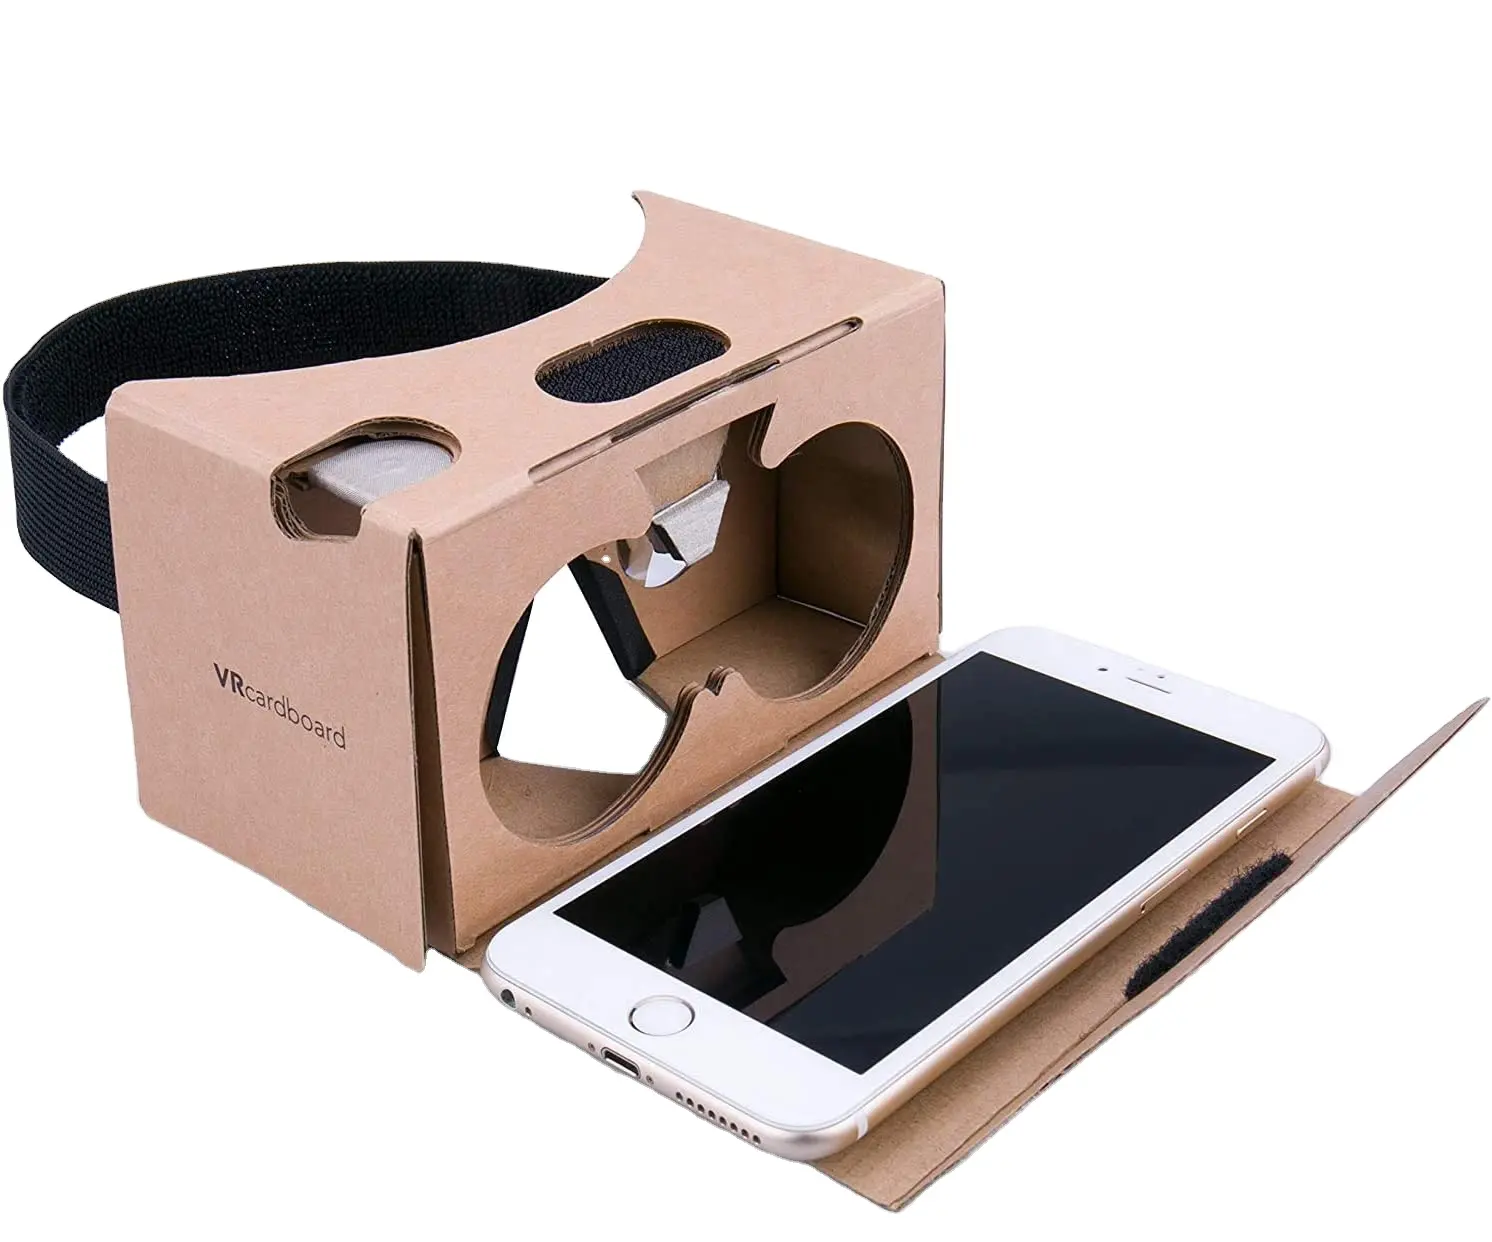 Cardboard V2 Version 2.0 (Latest 3rd Gen) Virtual Reality 3D VR glasses for smartphone